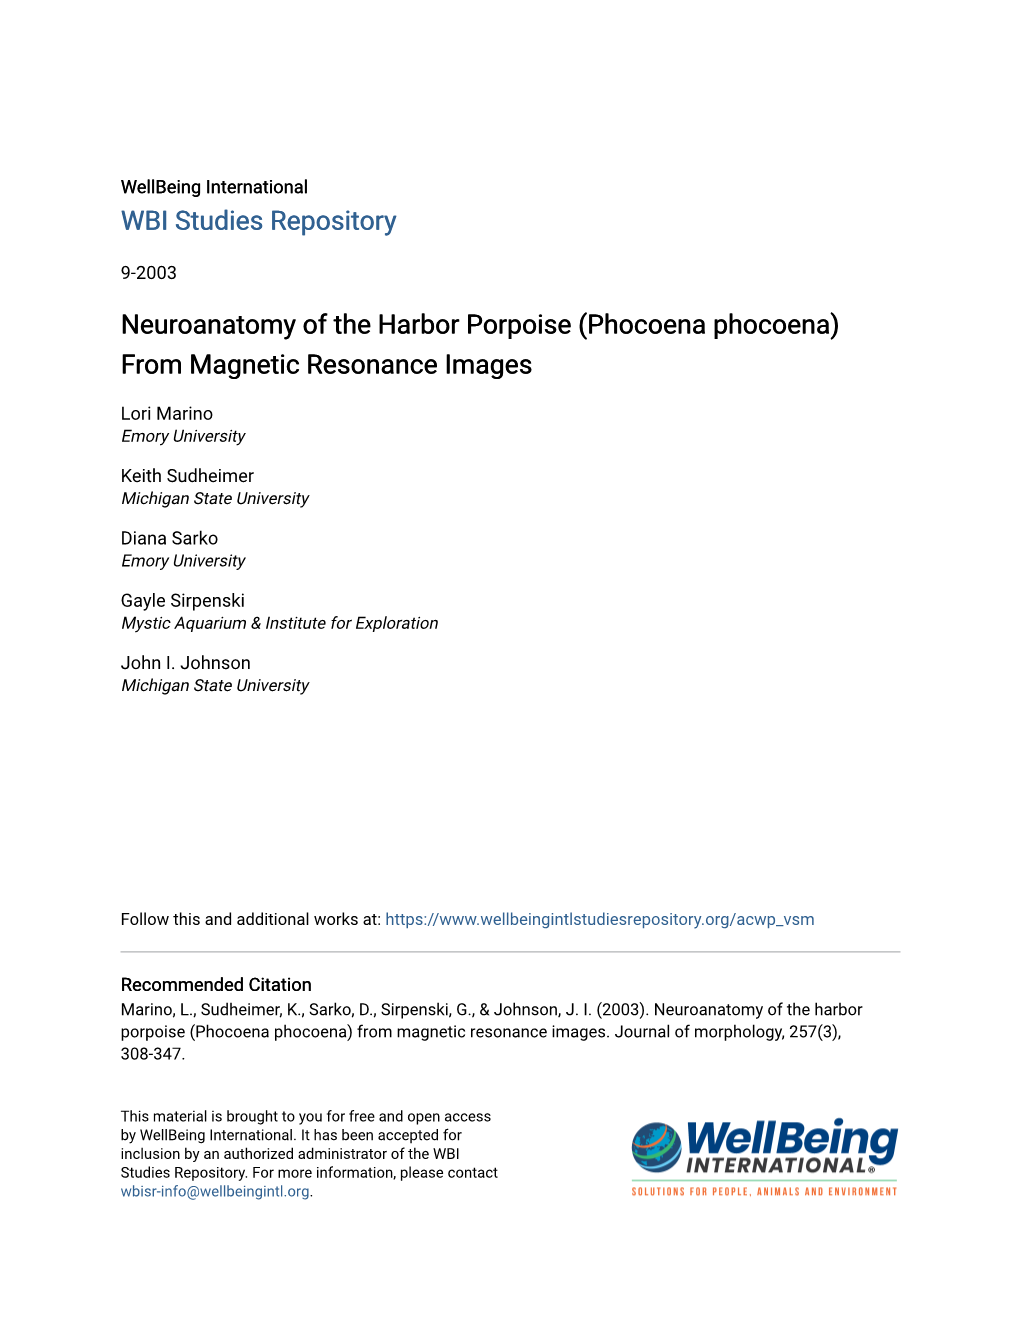 Neuroanatomy of the Harbor Porpoise (Phocoena Phocoena) from Magnetic Resonance Images